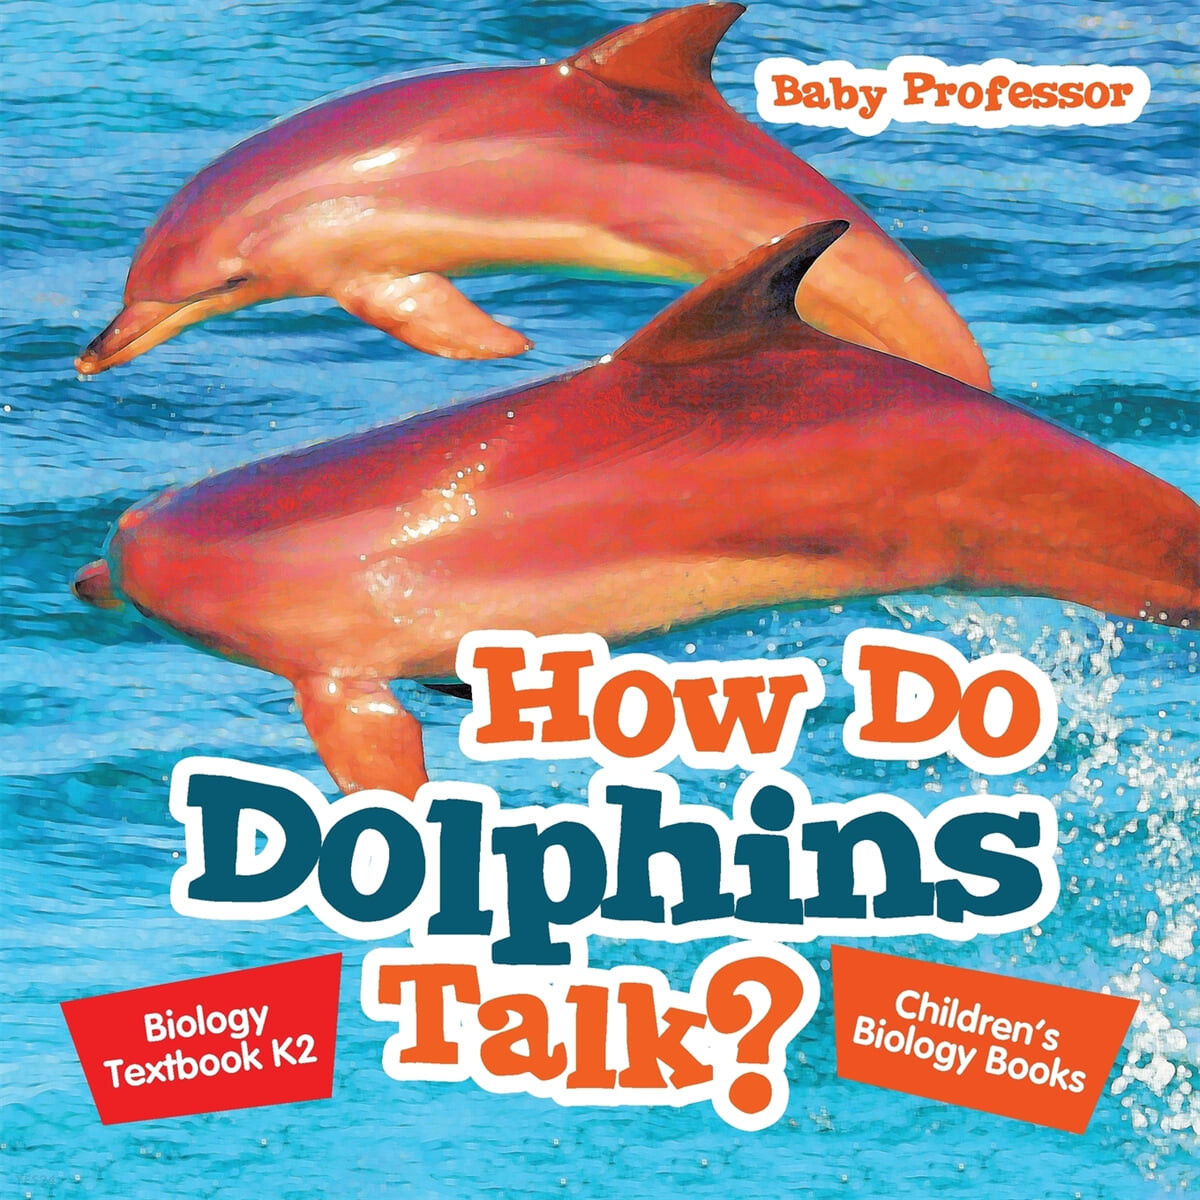 How Do Dolphins Talk? Biology Textbook K2 - Children’s Biology Books